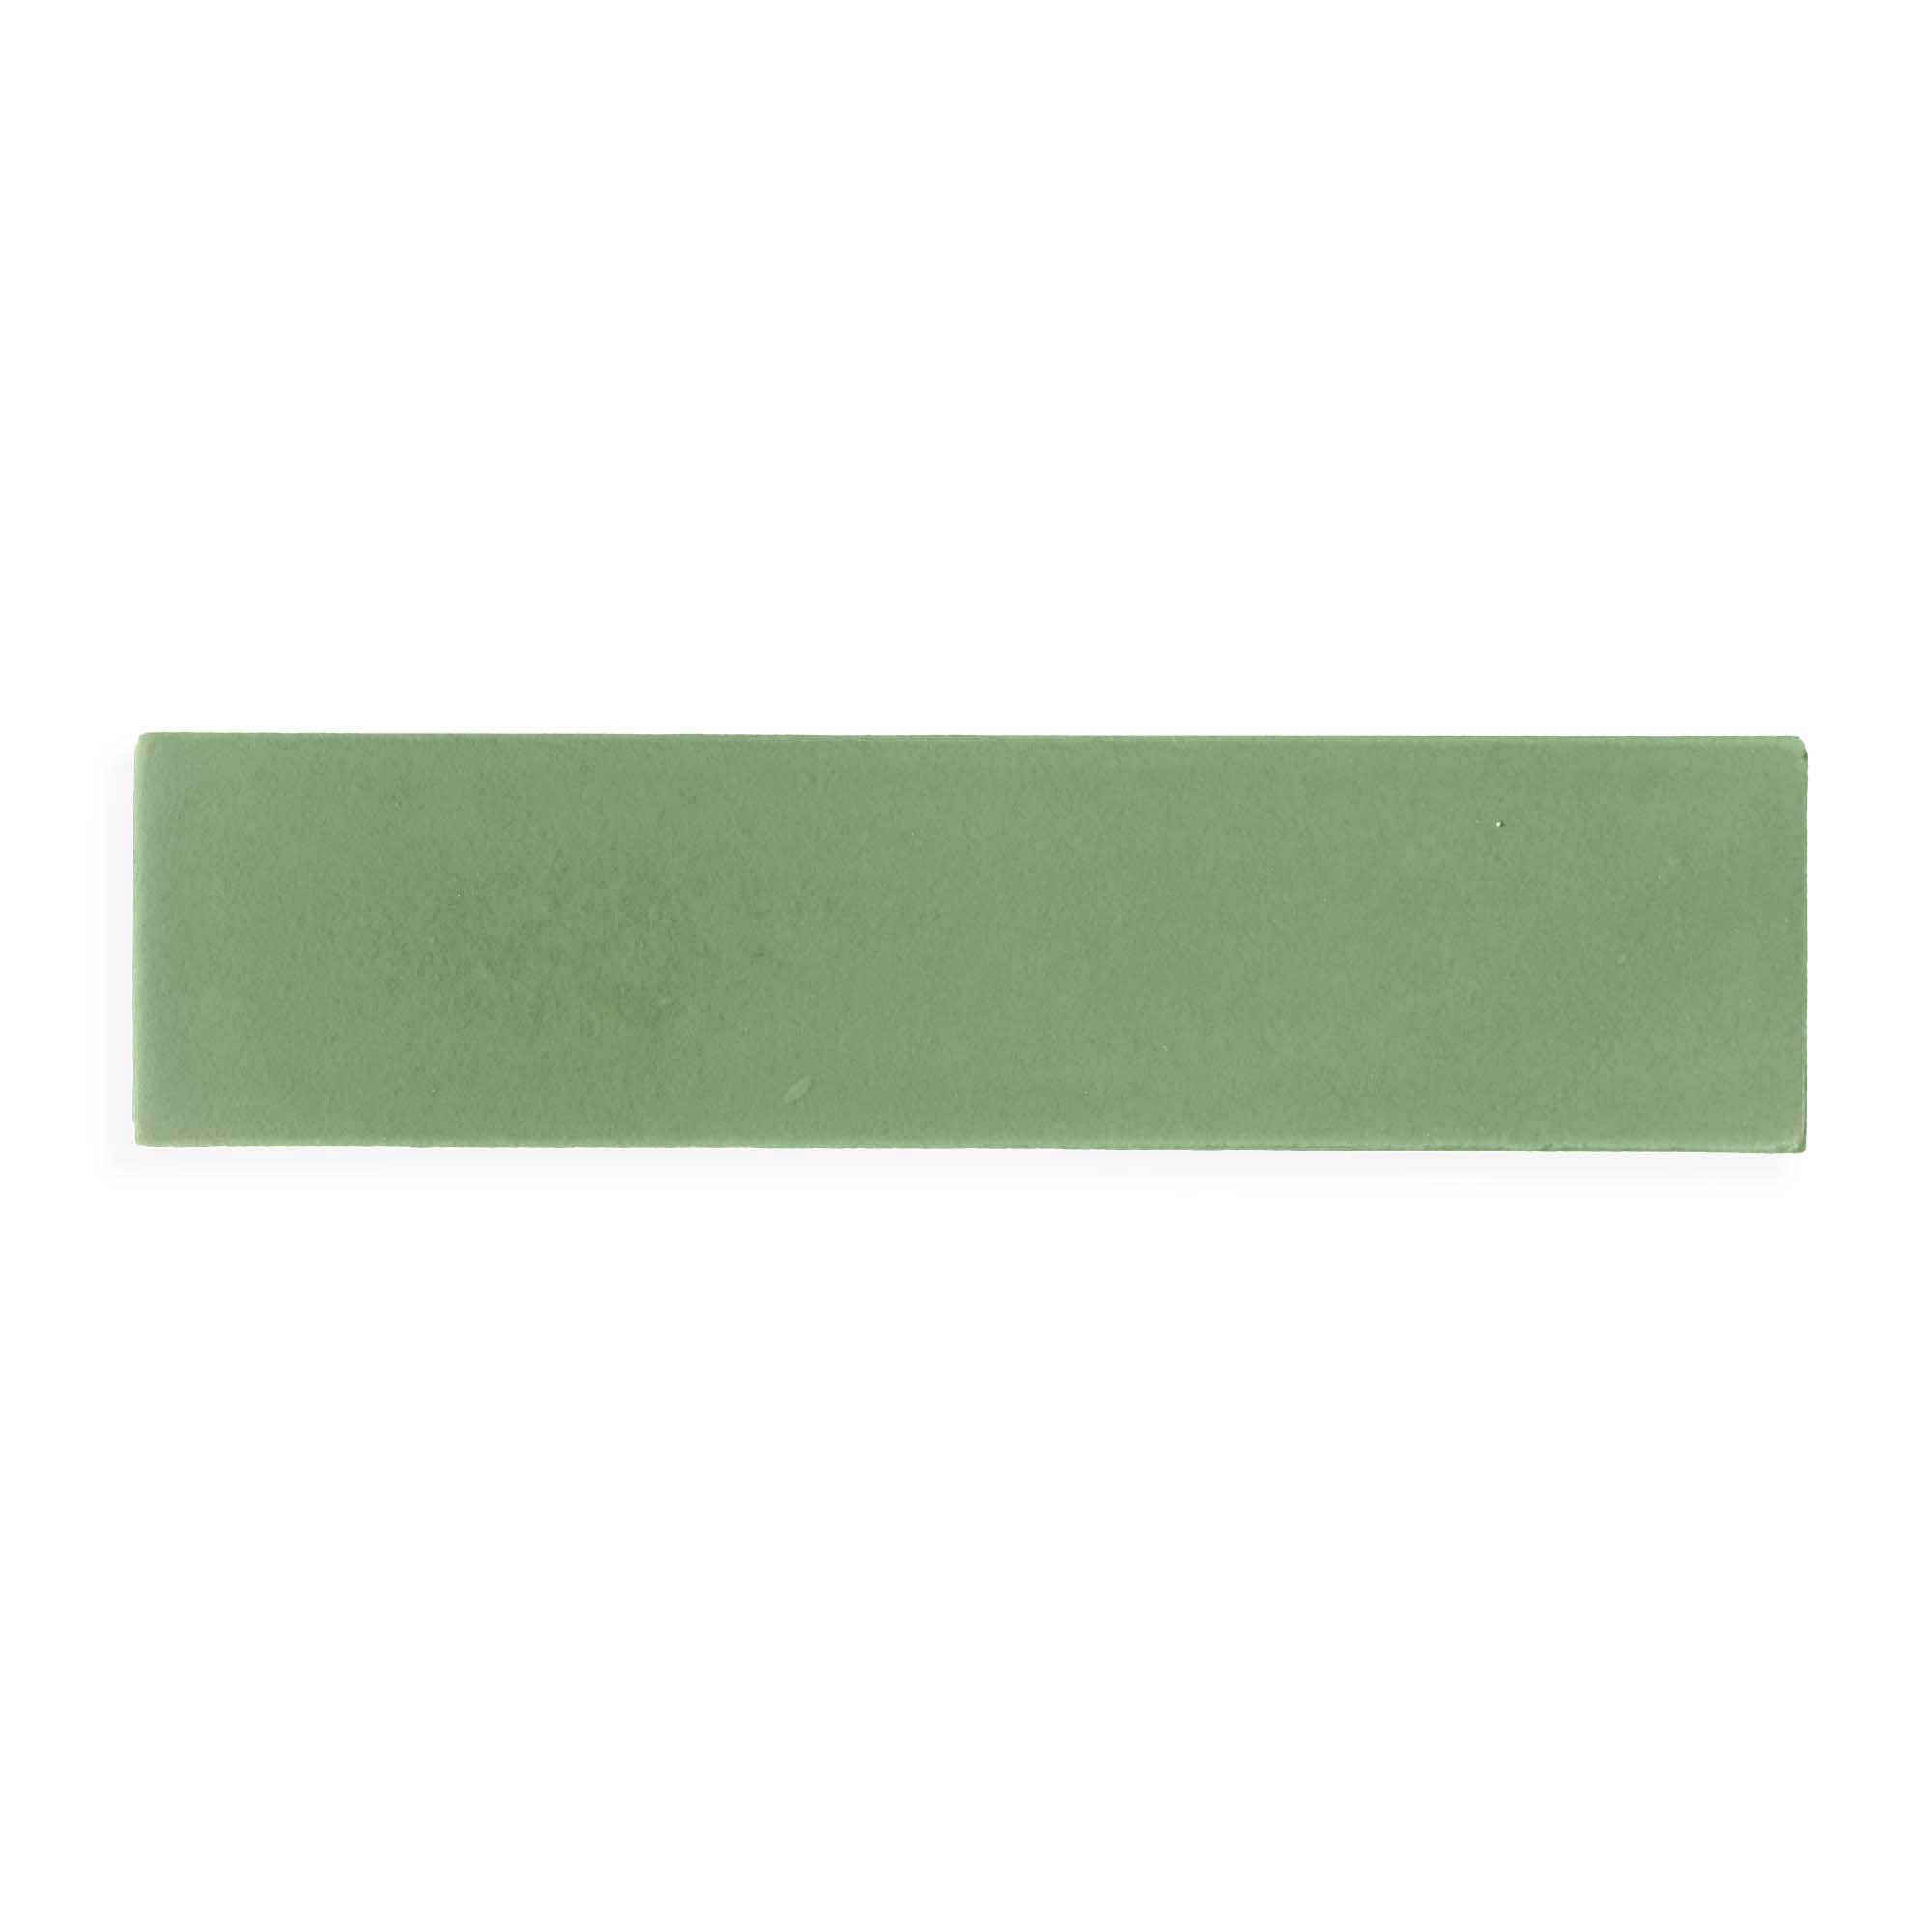 Sample: 2x8 Cactus Green - Matte - Ceramic Tile (1 sample=2 tiles)